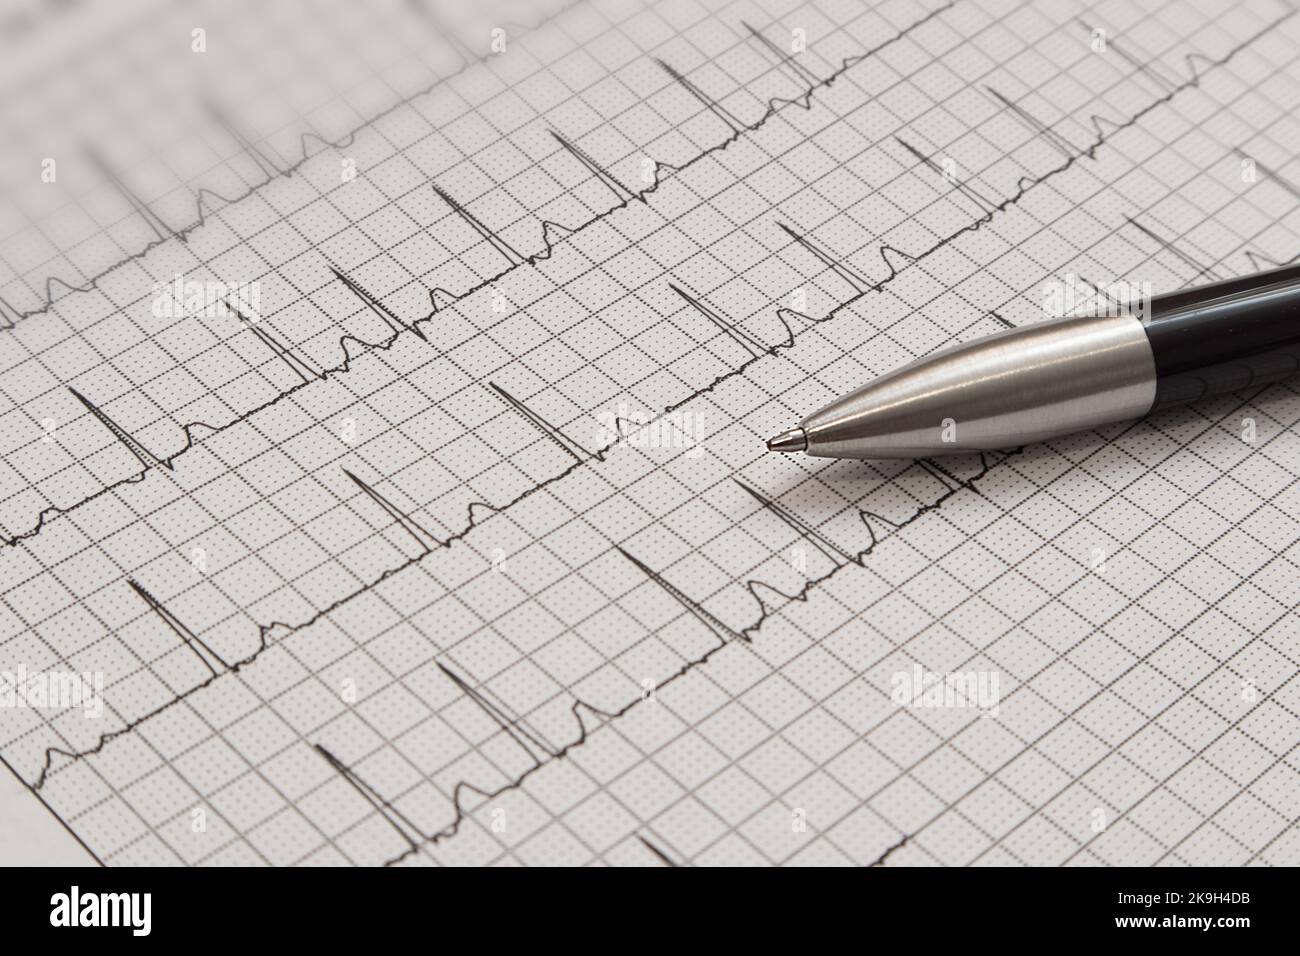 Electrocardiogram presenting possible arrhythmia. Stock Photo